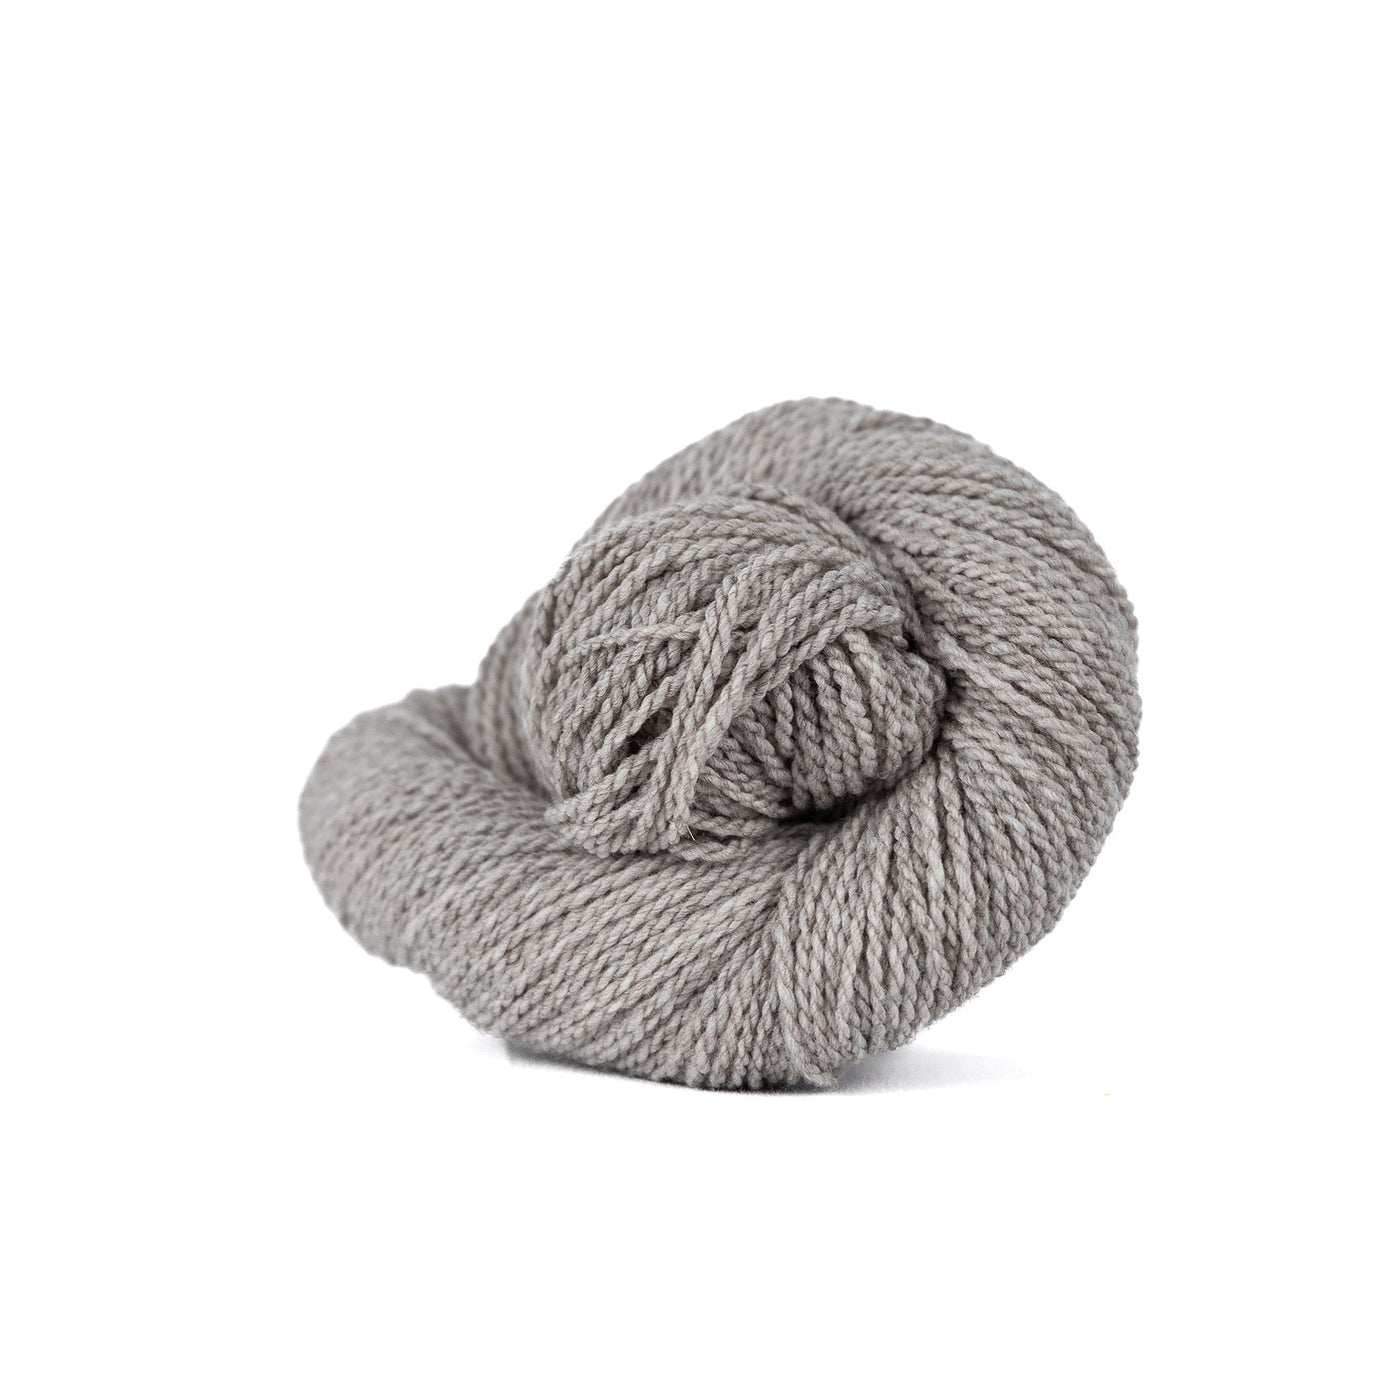 Jenny Lake Shawl Knitting Bundle